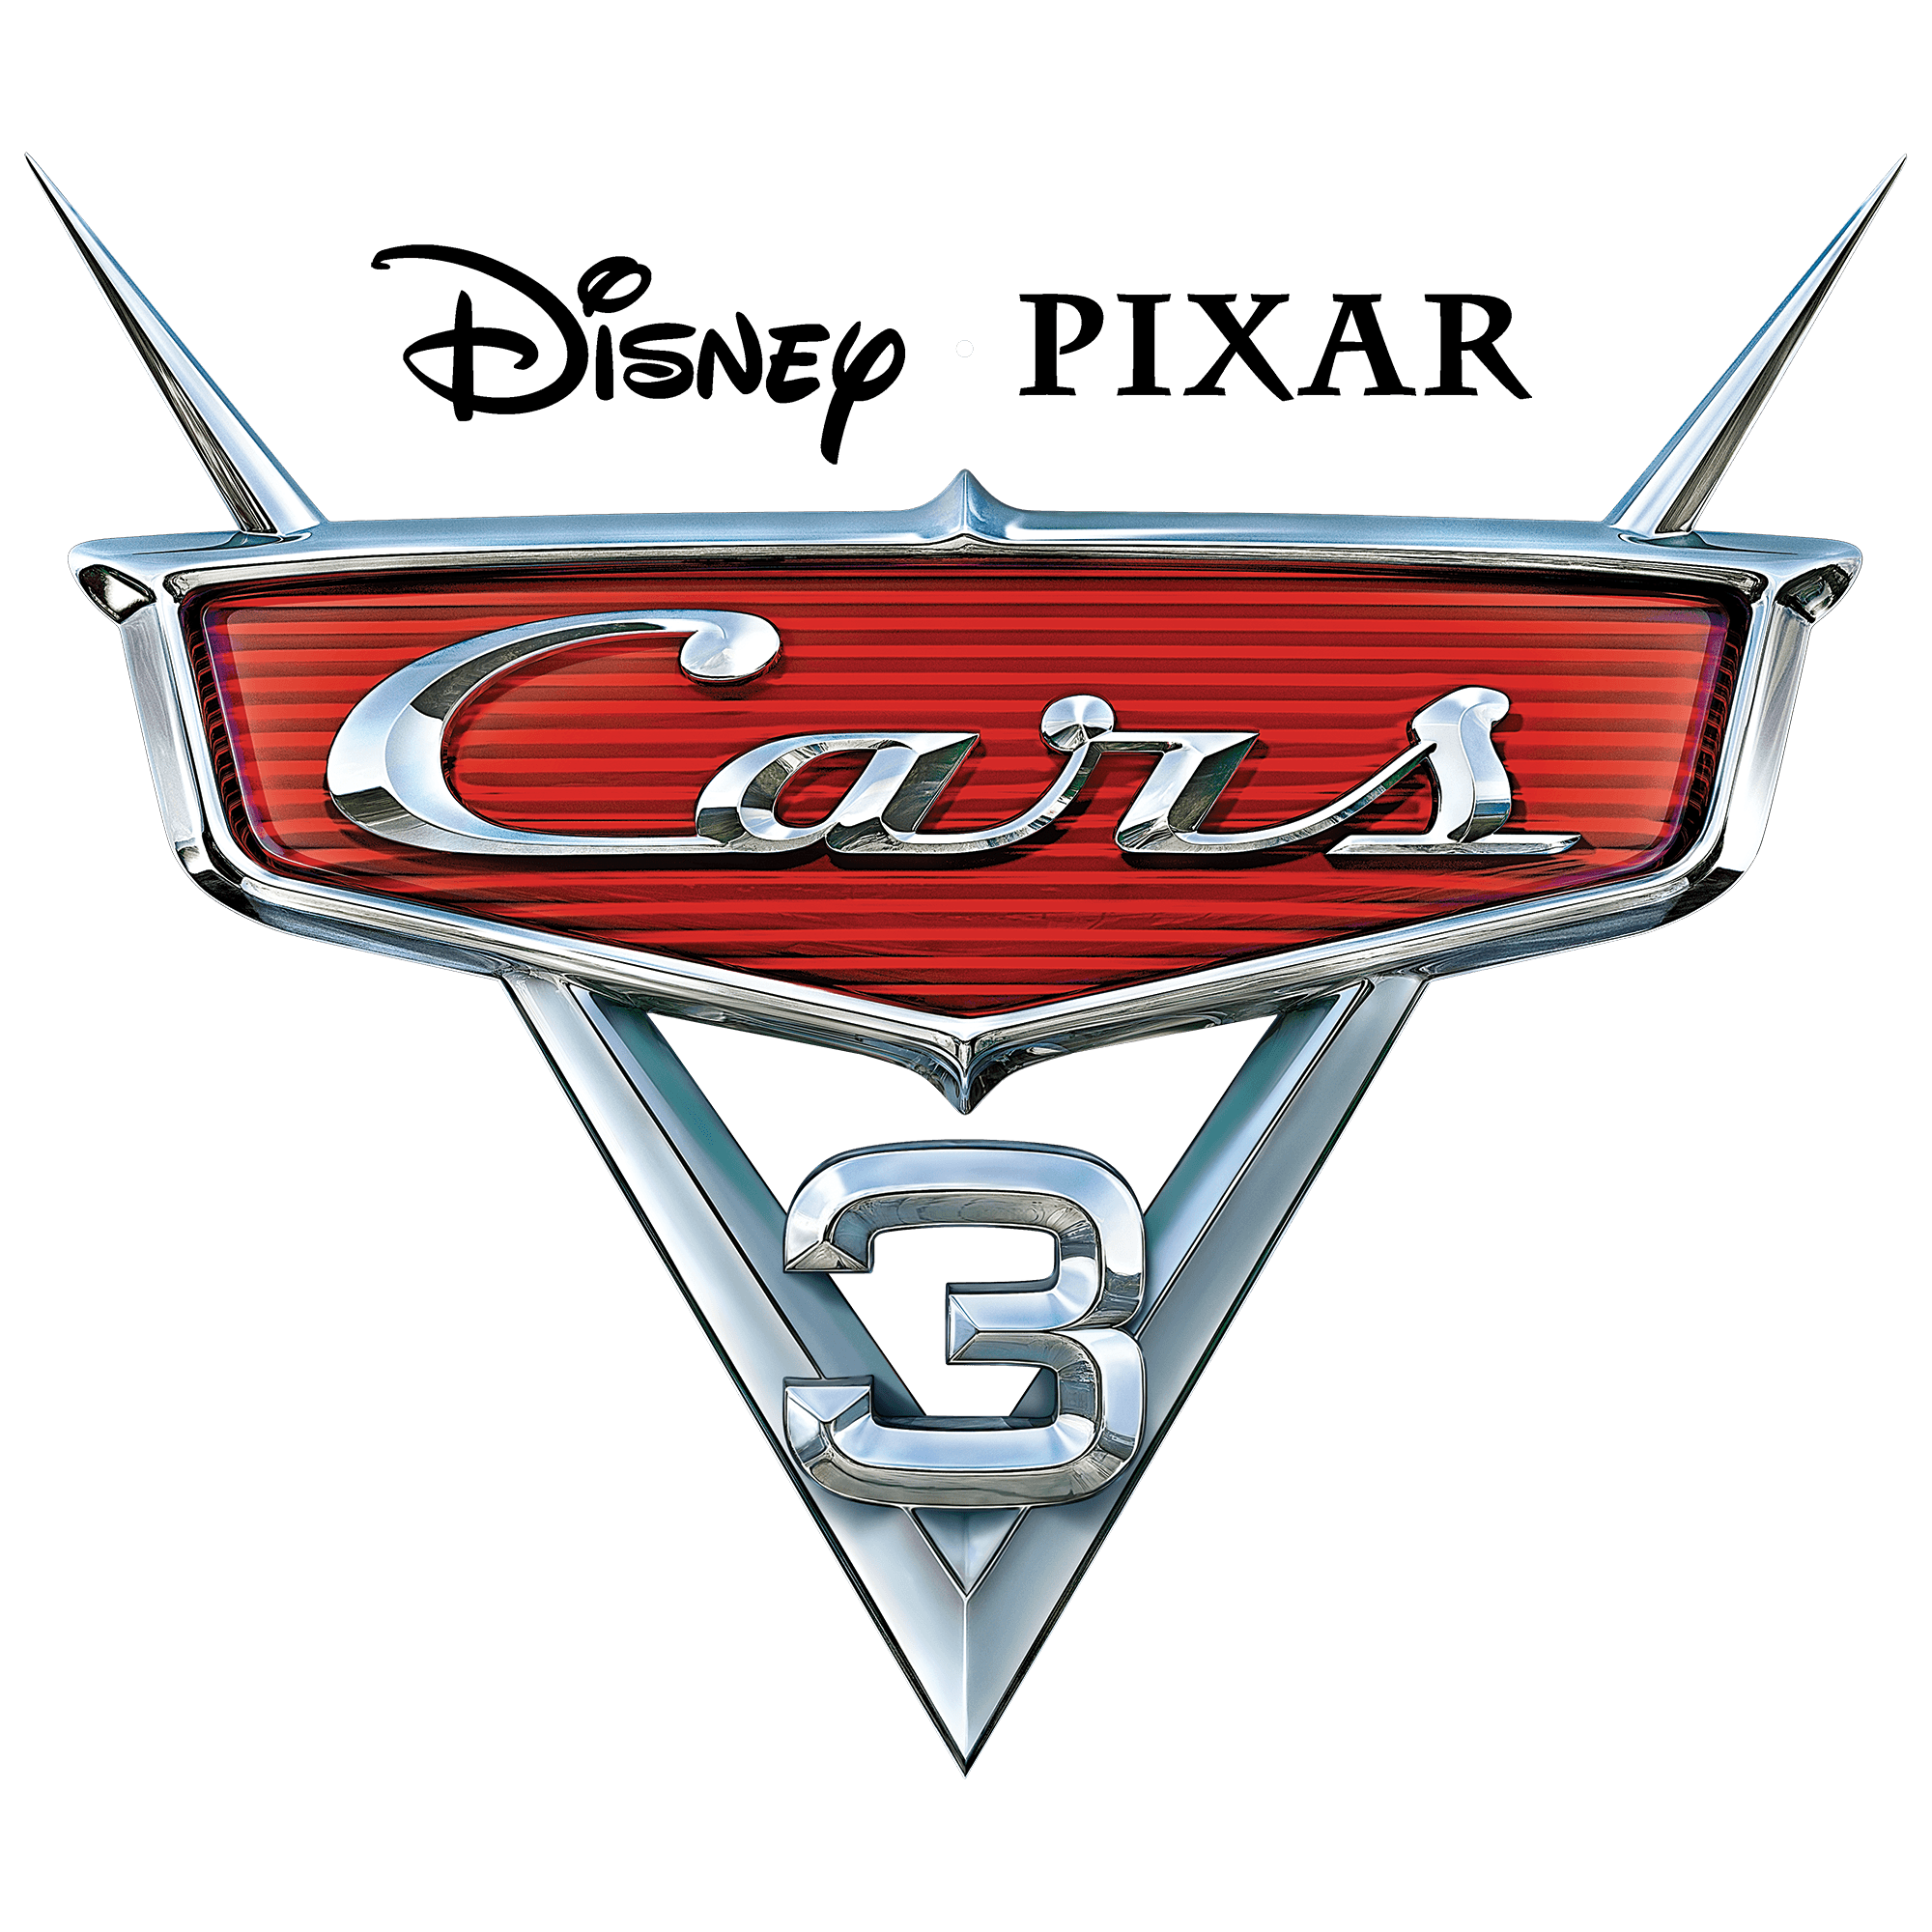 Disney Cars 3 Logo - 3 Disney Pixar Cars Logo Png Images